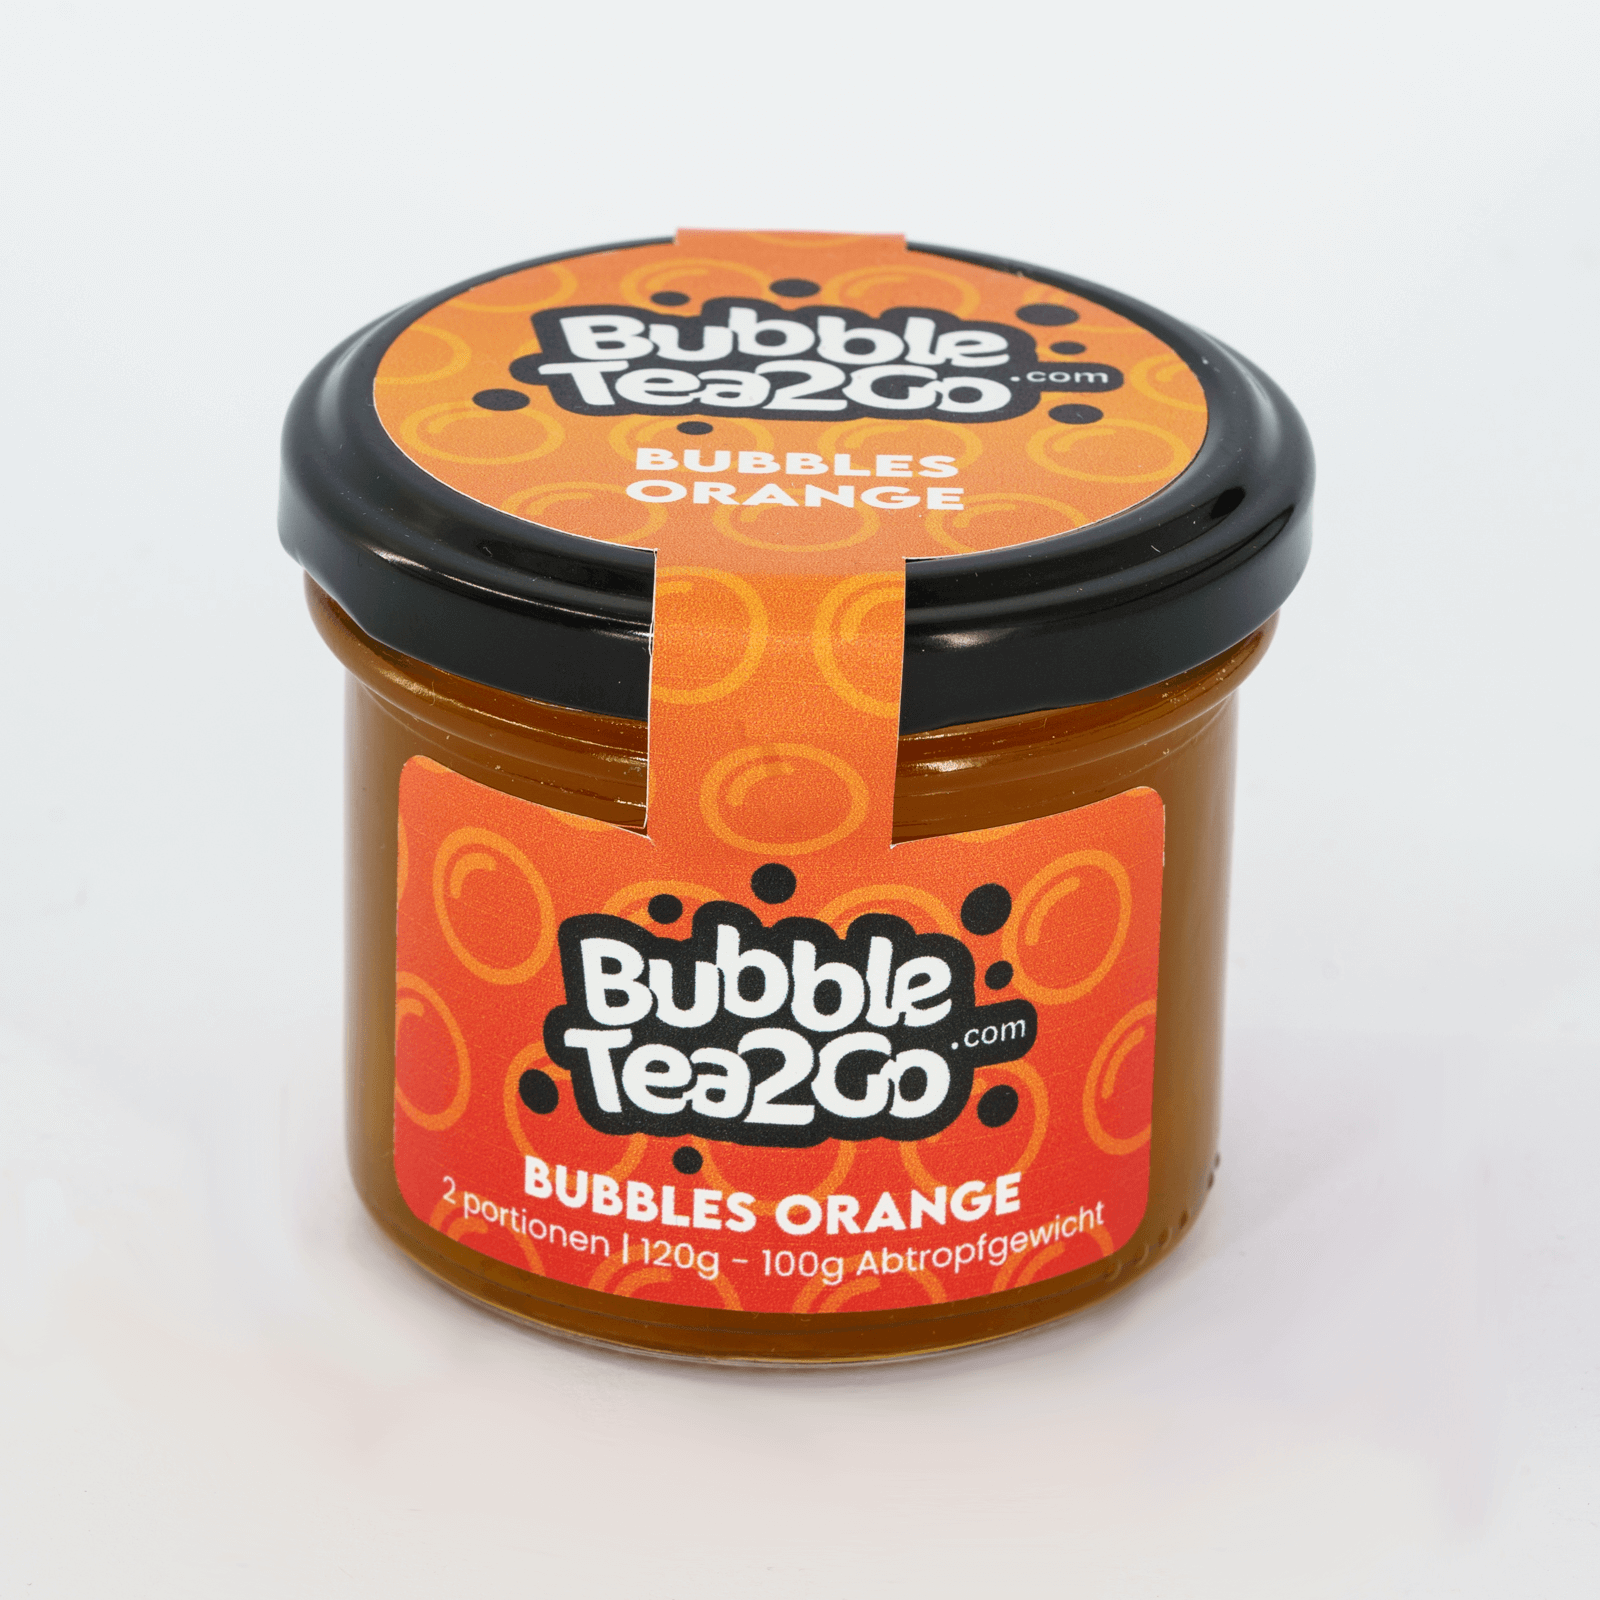 Bubbles - Orange 2 Portionen